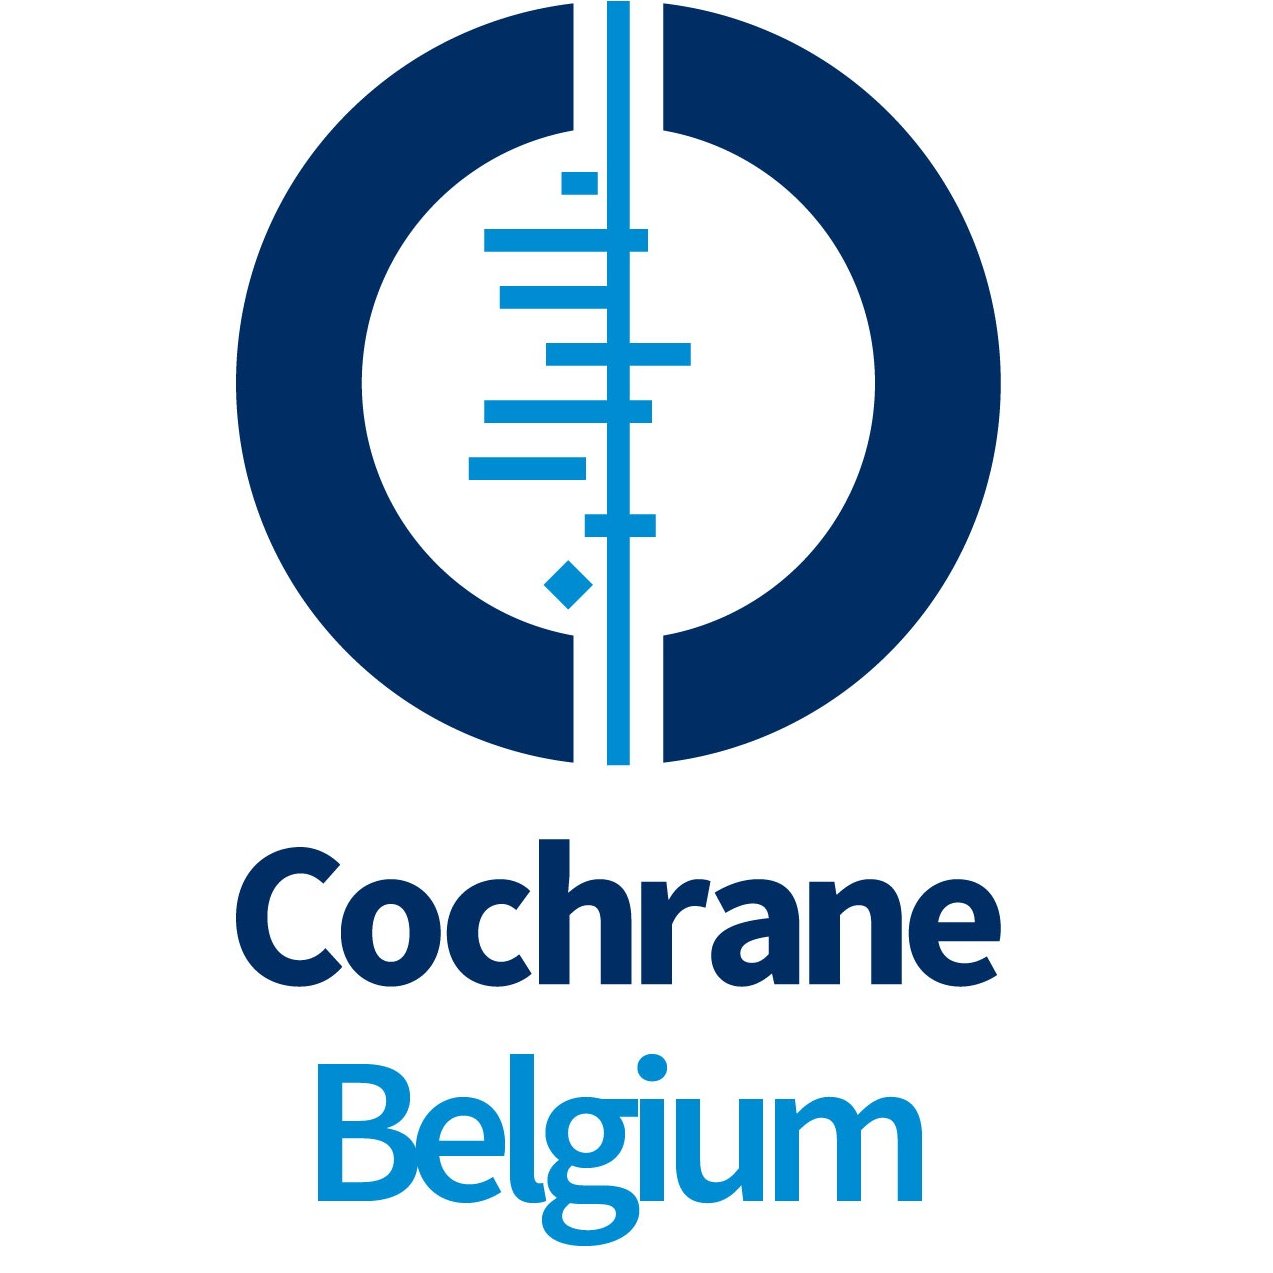 Belgian representative of Cochrane, located in the Belgian Centre for Evidence-Based Medicine (@CEBAMvzw), proudly spreading EBM in Belgium